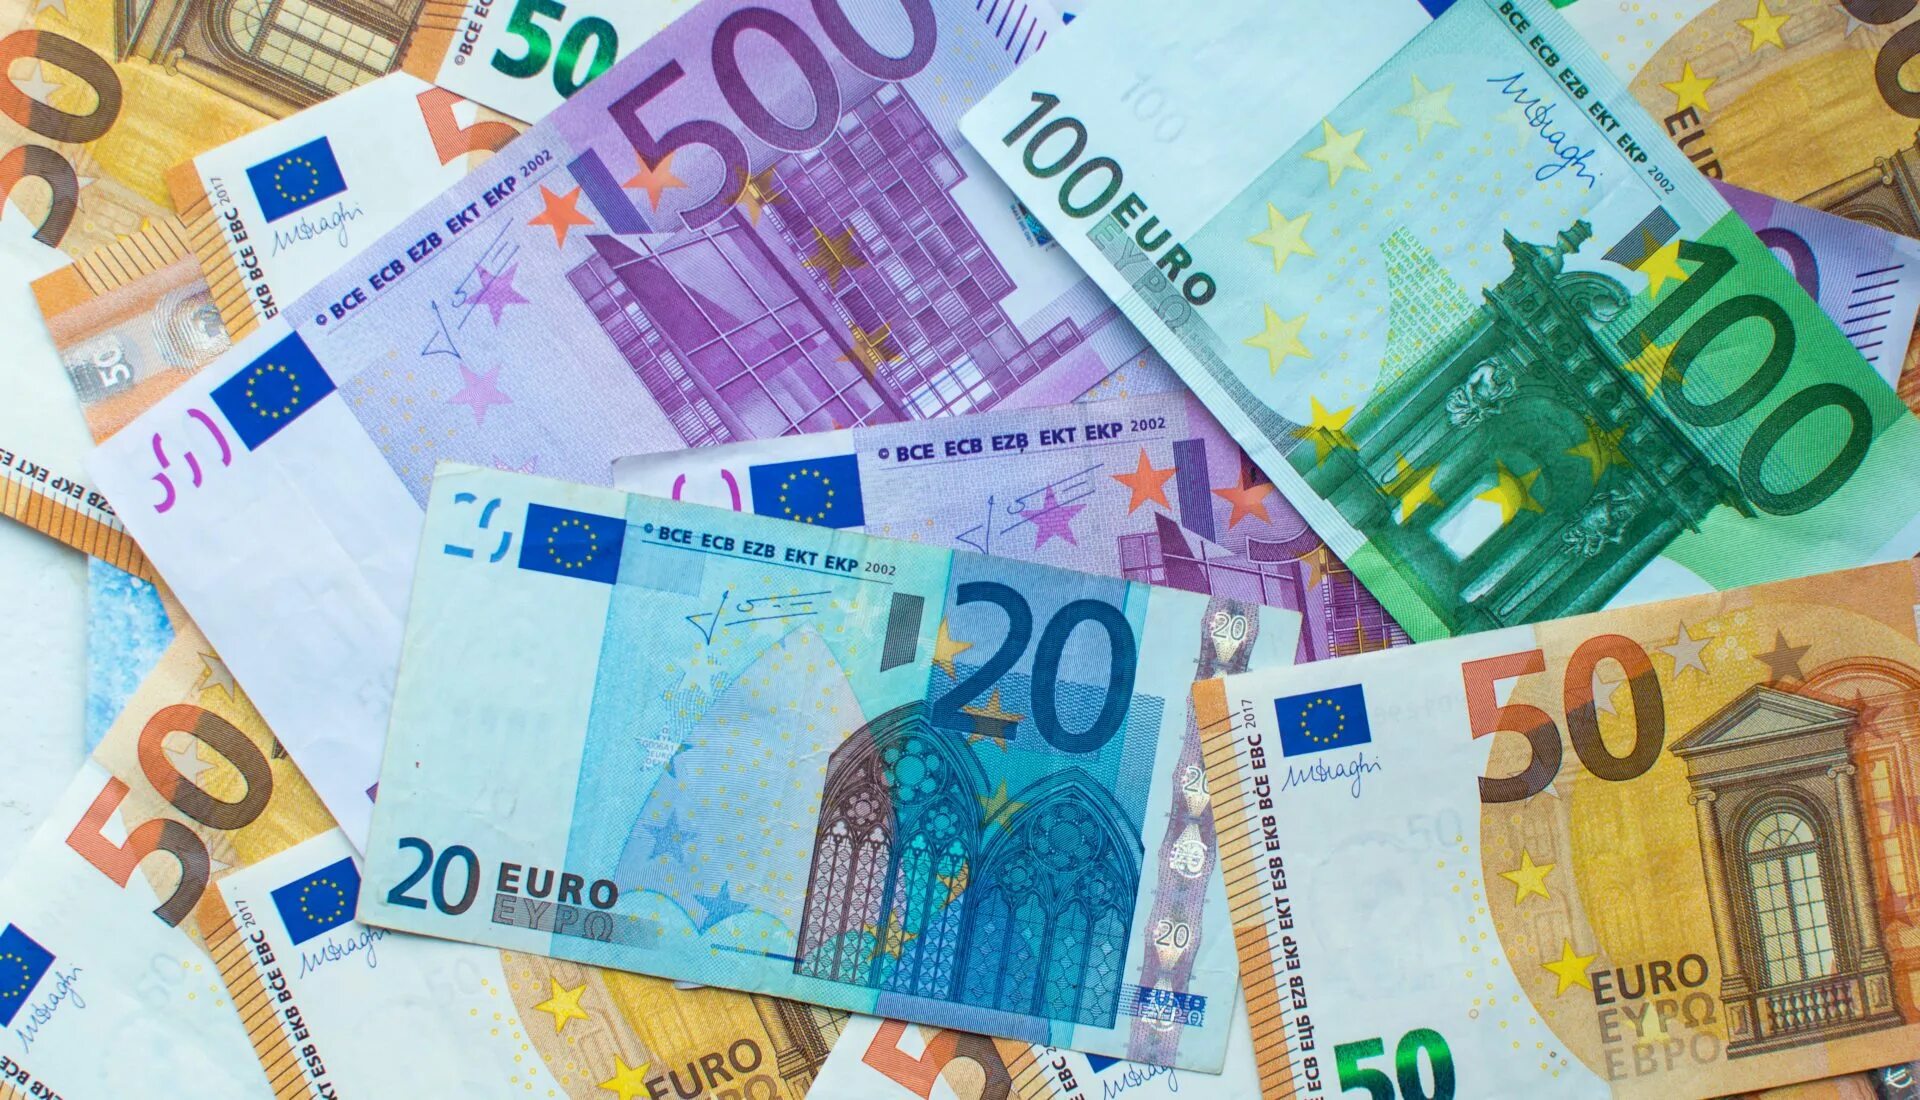 Национальная валюта евро. Евро. Деньги евро. Euro валюта. Евро валюта картинки.